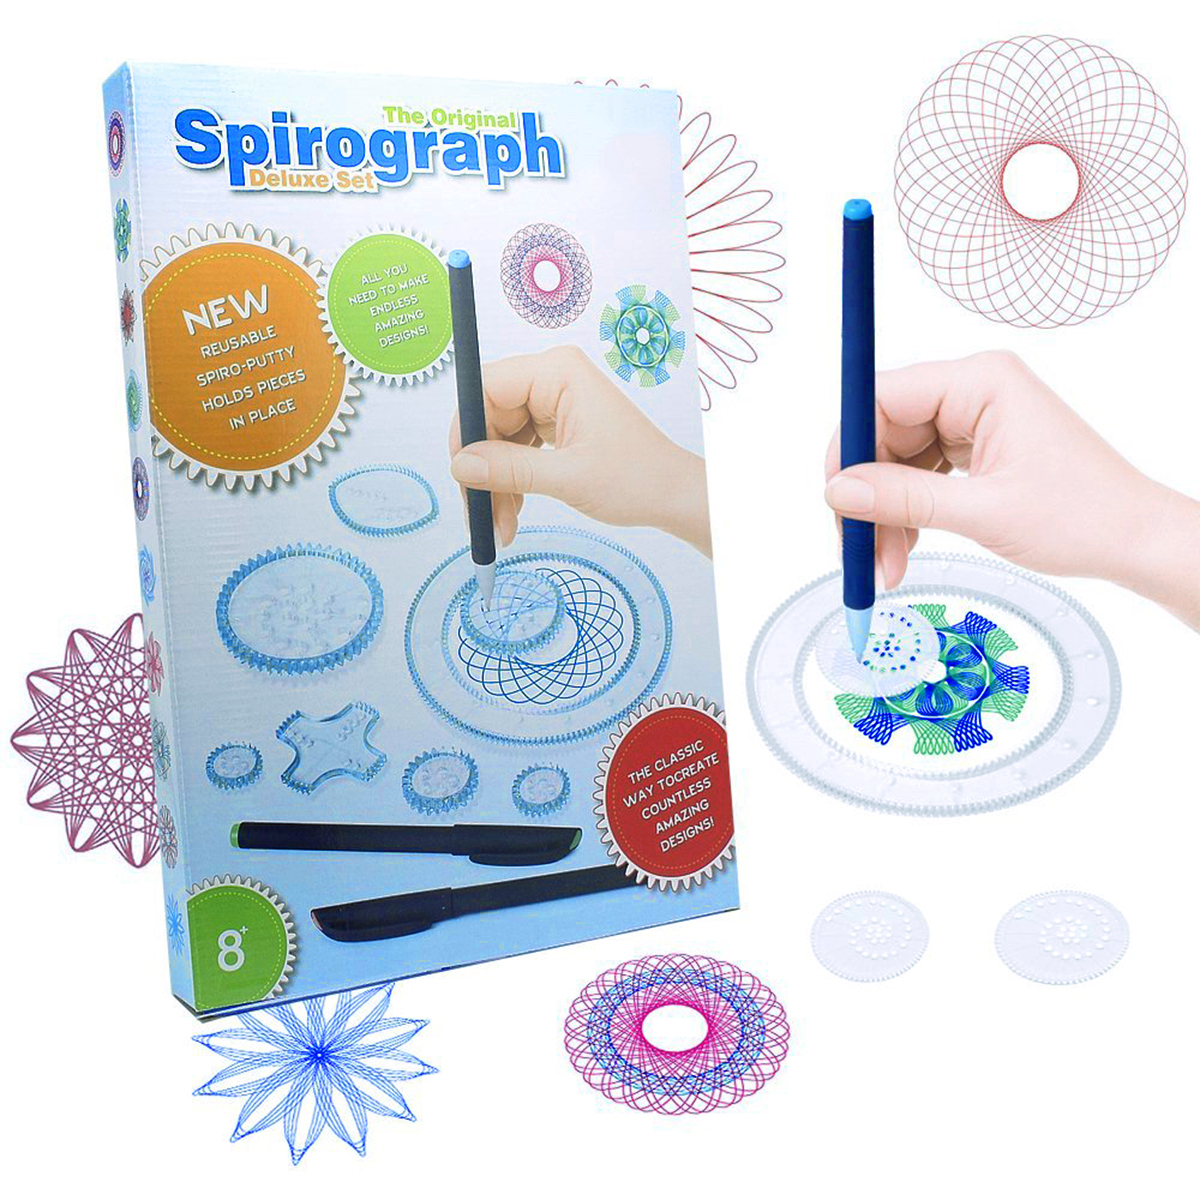 Original Spirograph Design Set Geometric Drawing Ruler Kids Spiral Art Craft Creation Education Toy 10